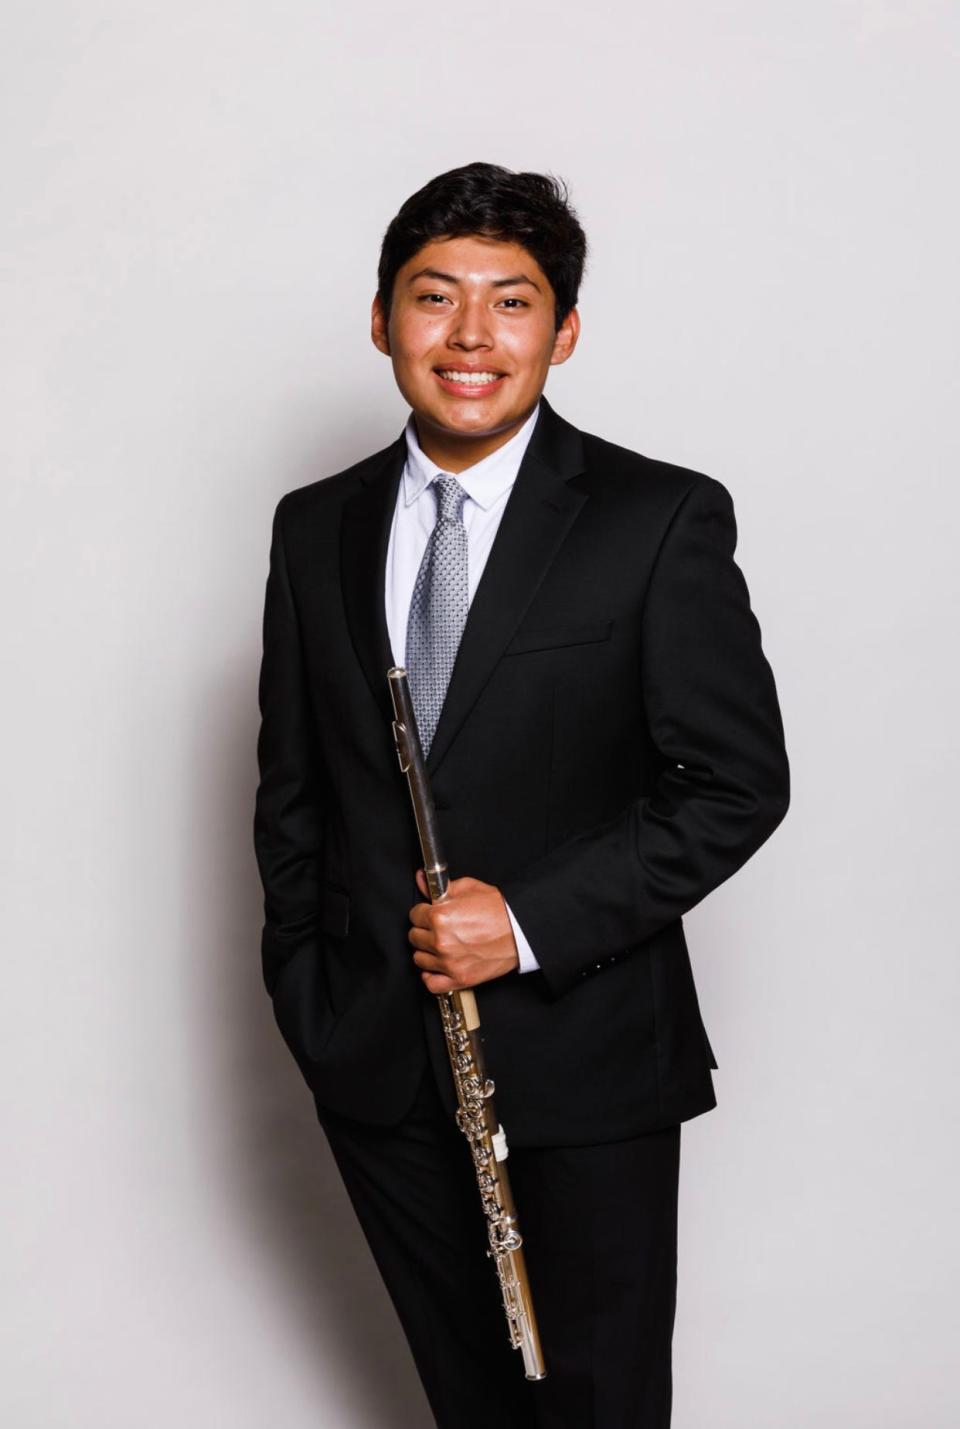 Colchester High School student and flute player Logan Crocker